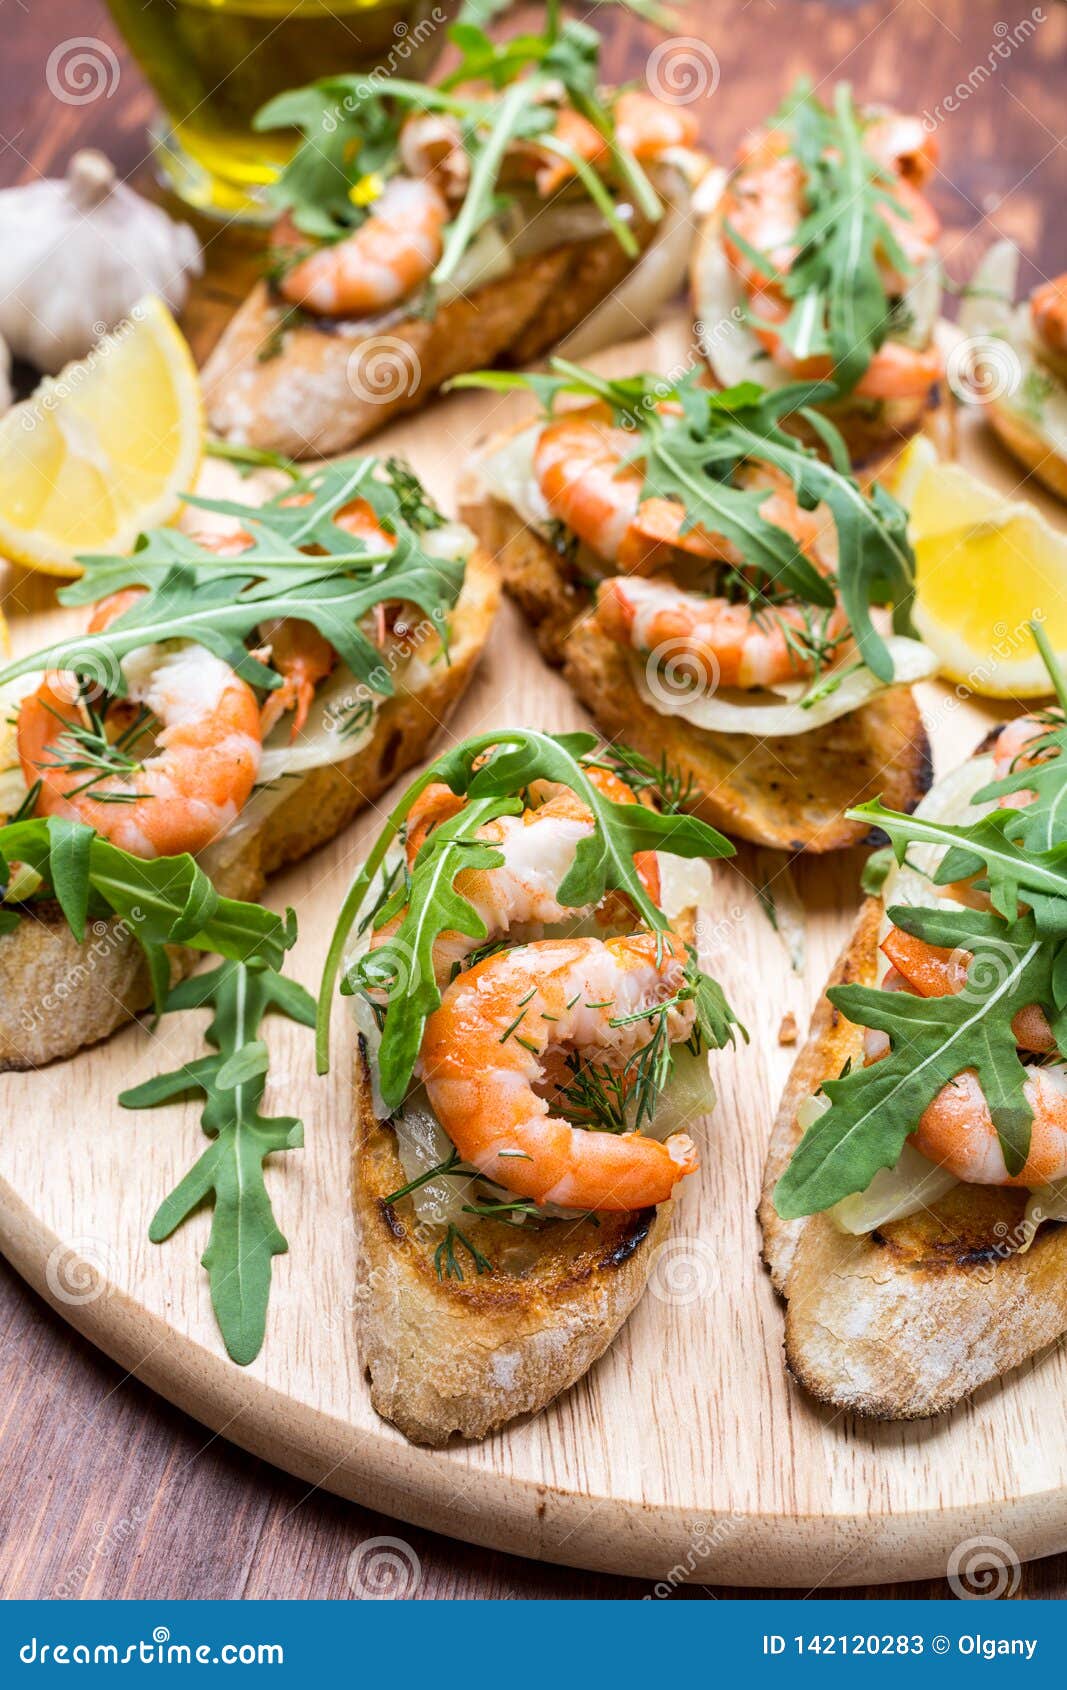 Shrimp Bruschettas with Fennel Salad Stock Image - Image of bread ...